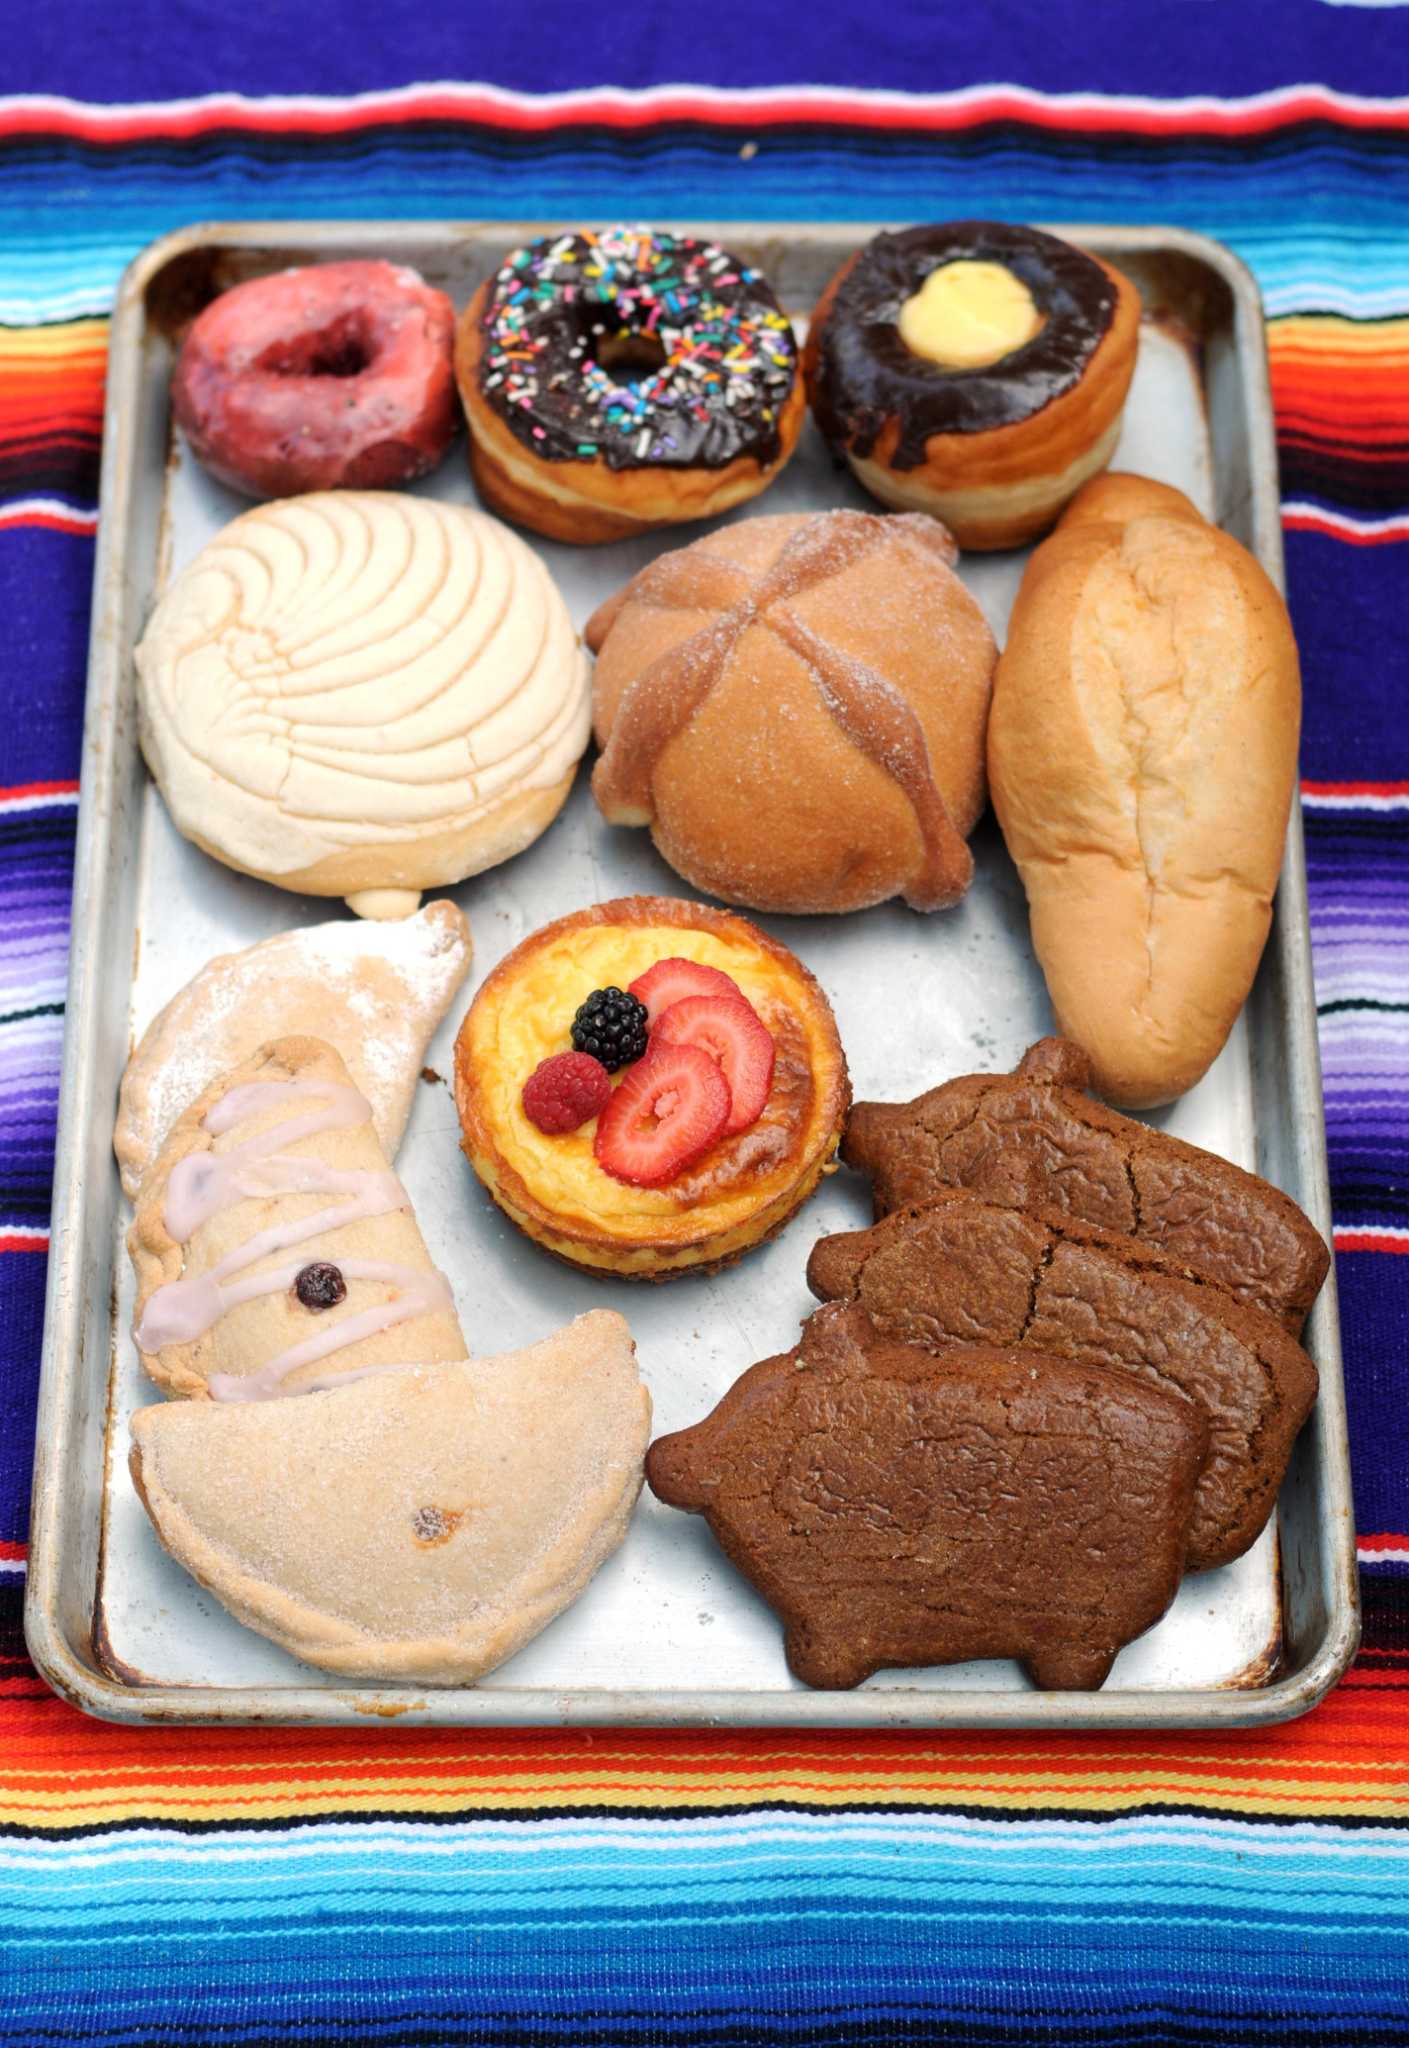 The best San Antonio panaderías for conchas, empanadas, doughnuts